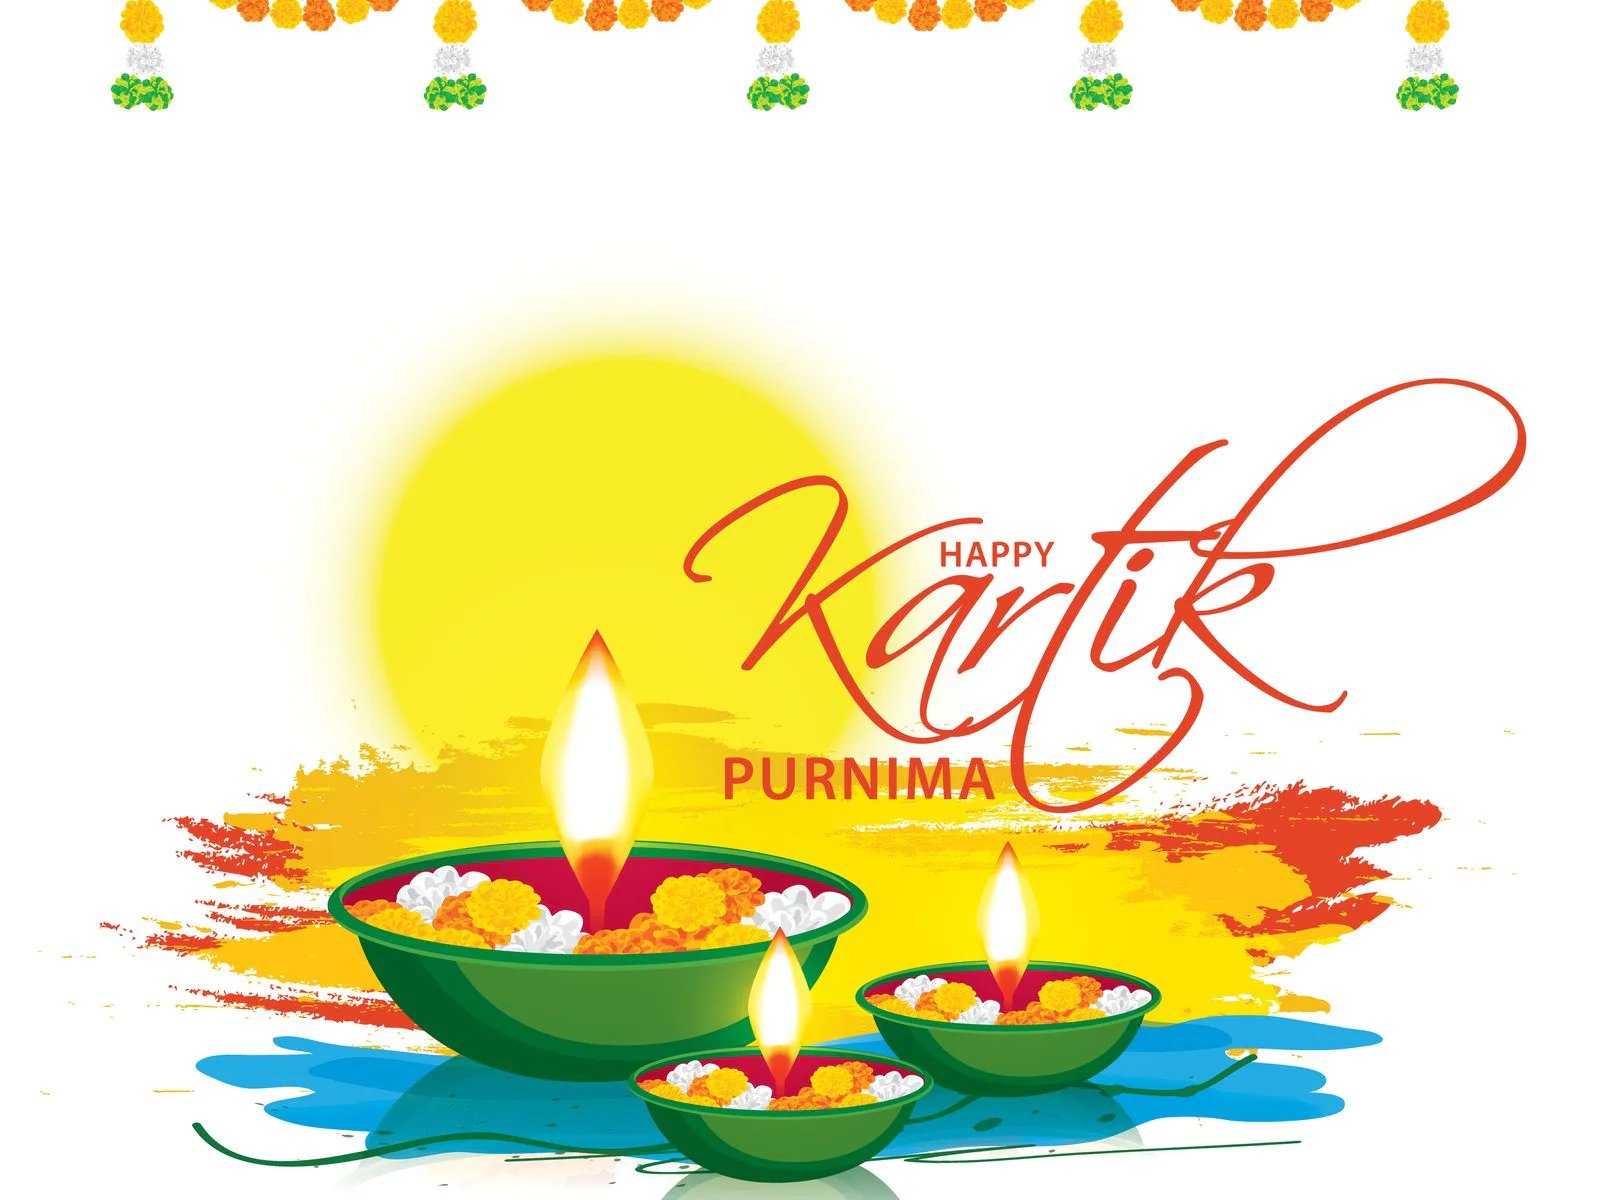 Happy Kartik Purnima